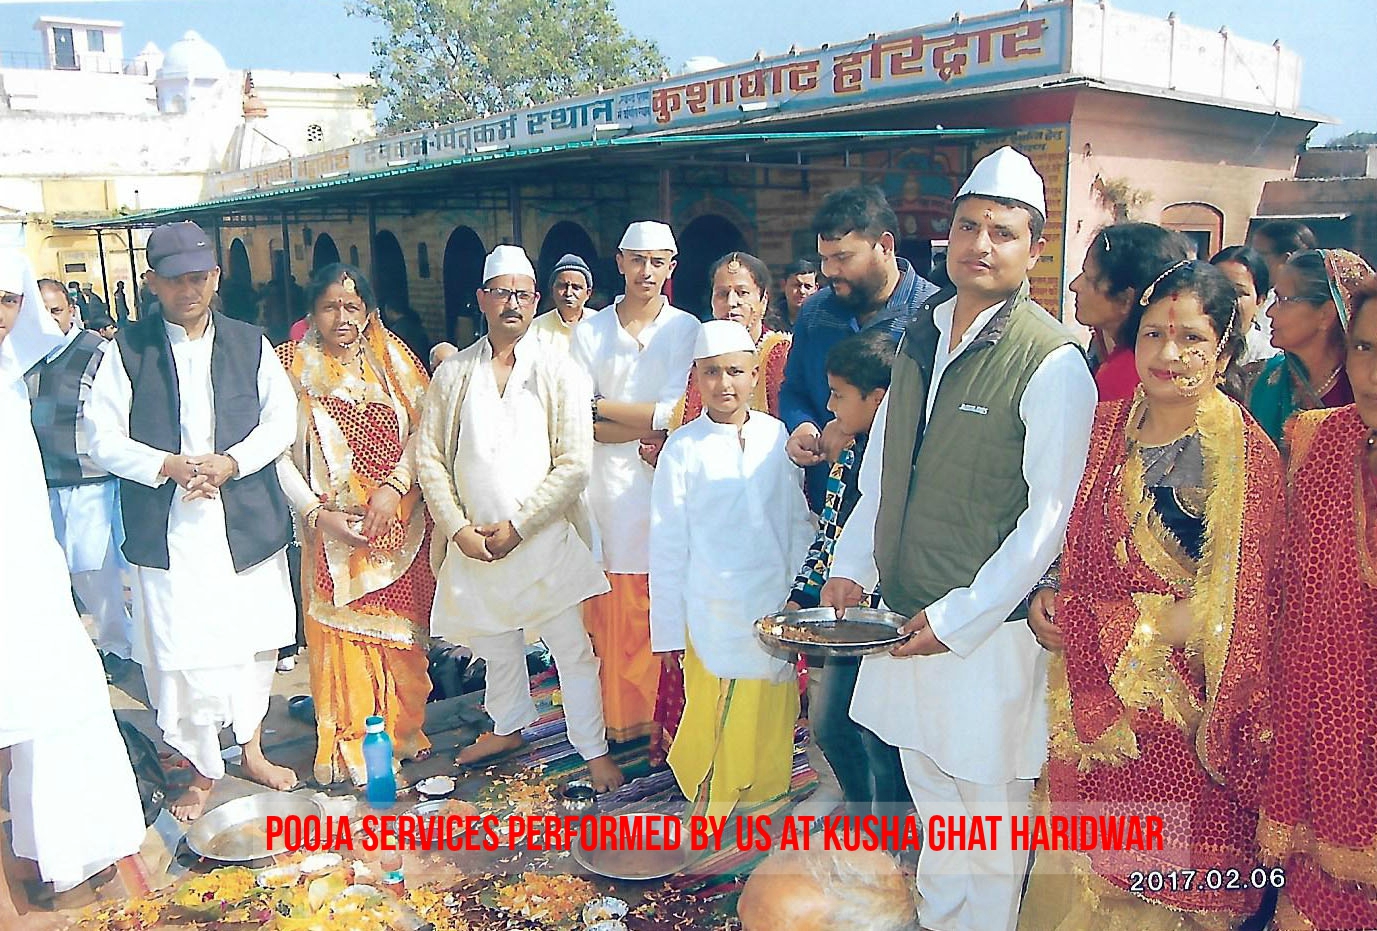 Pooja services